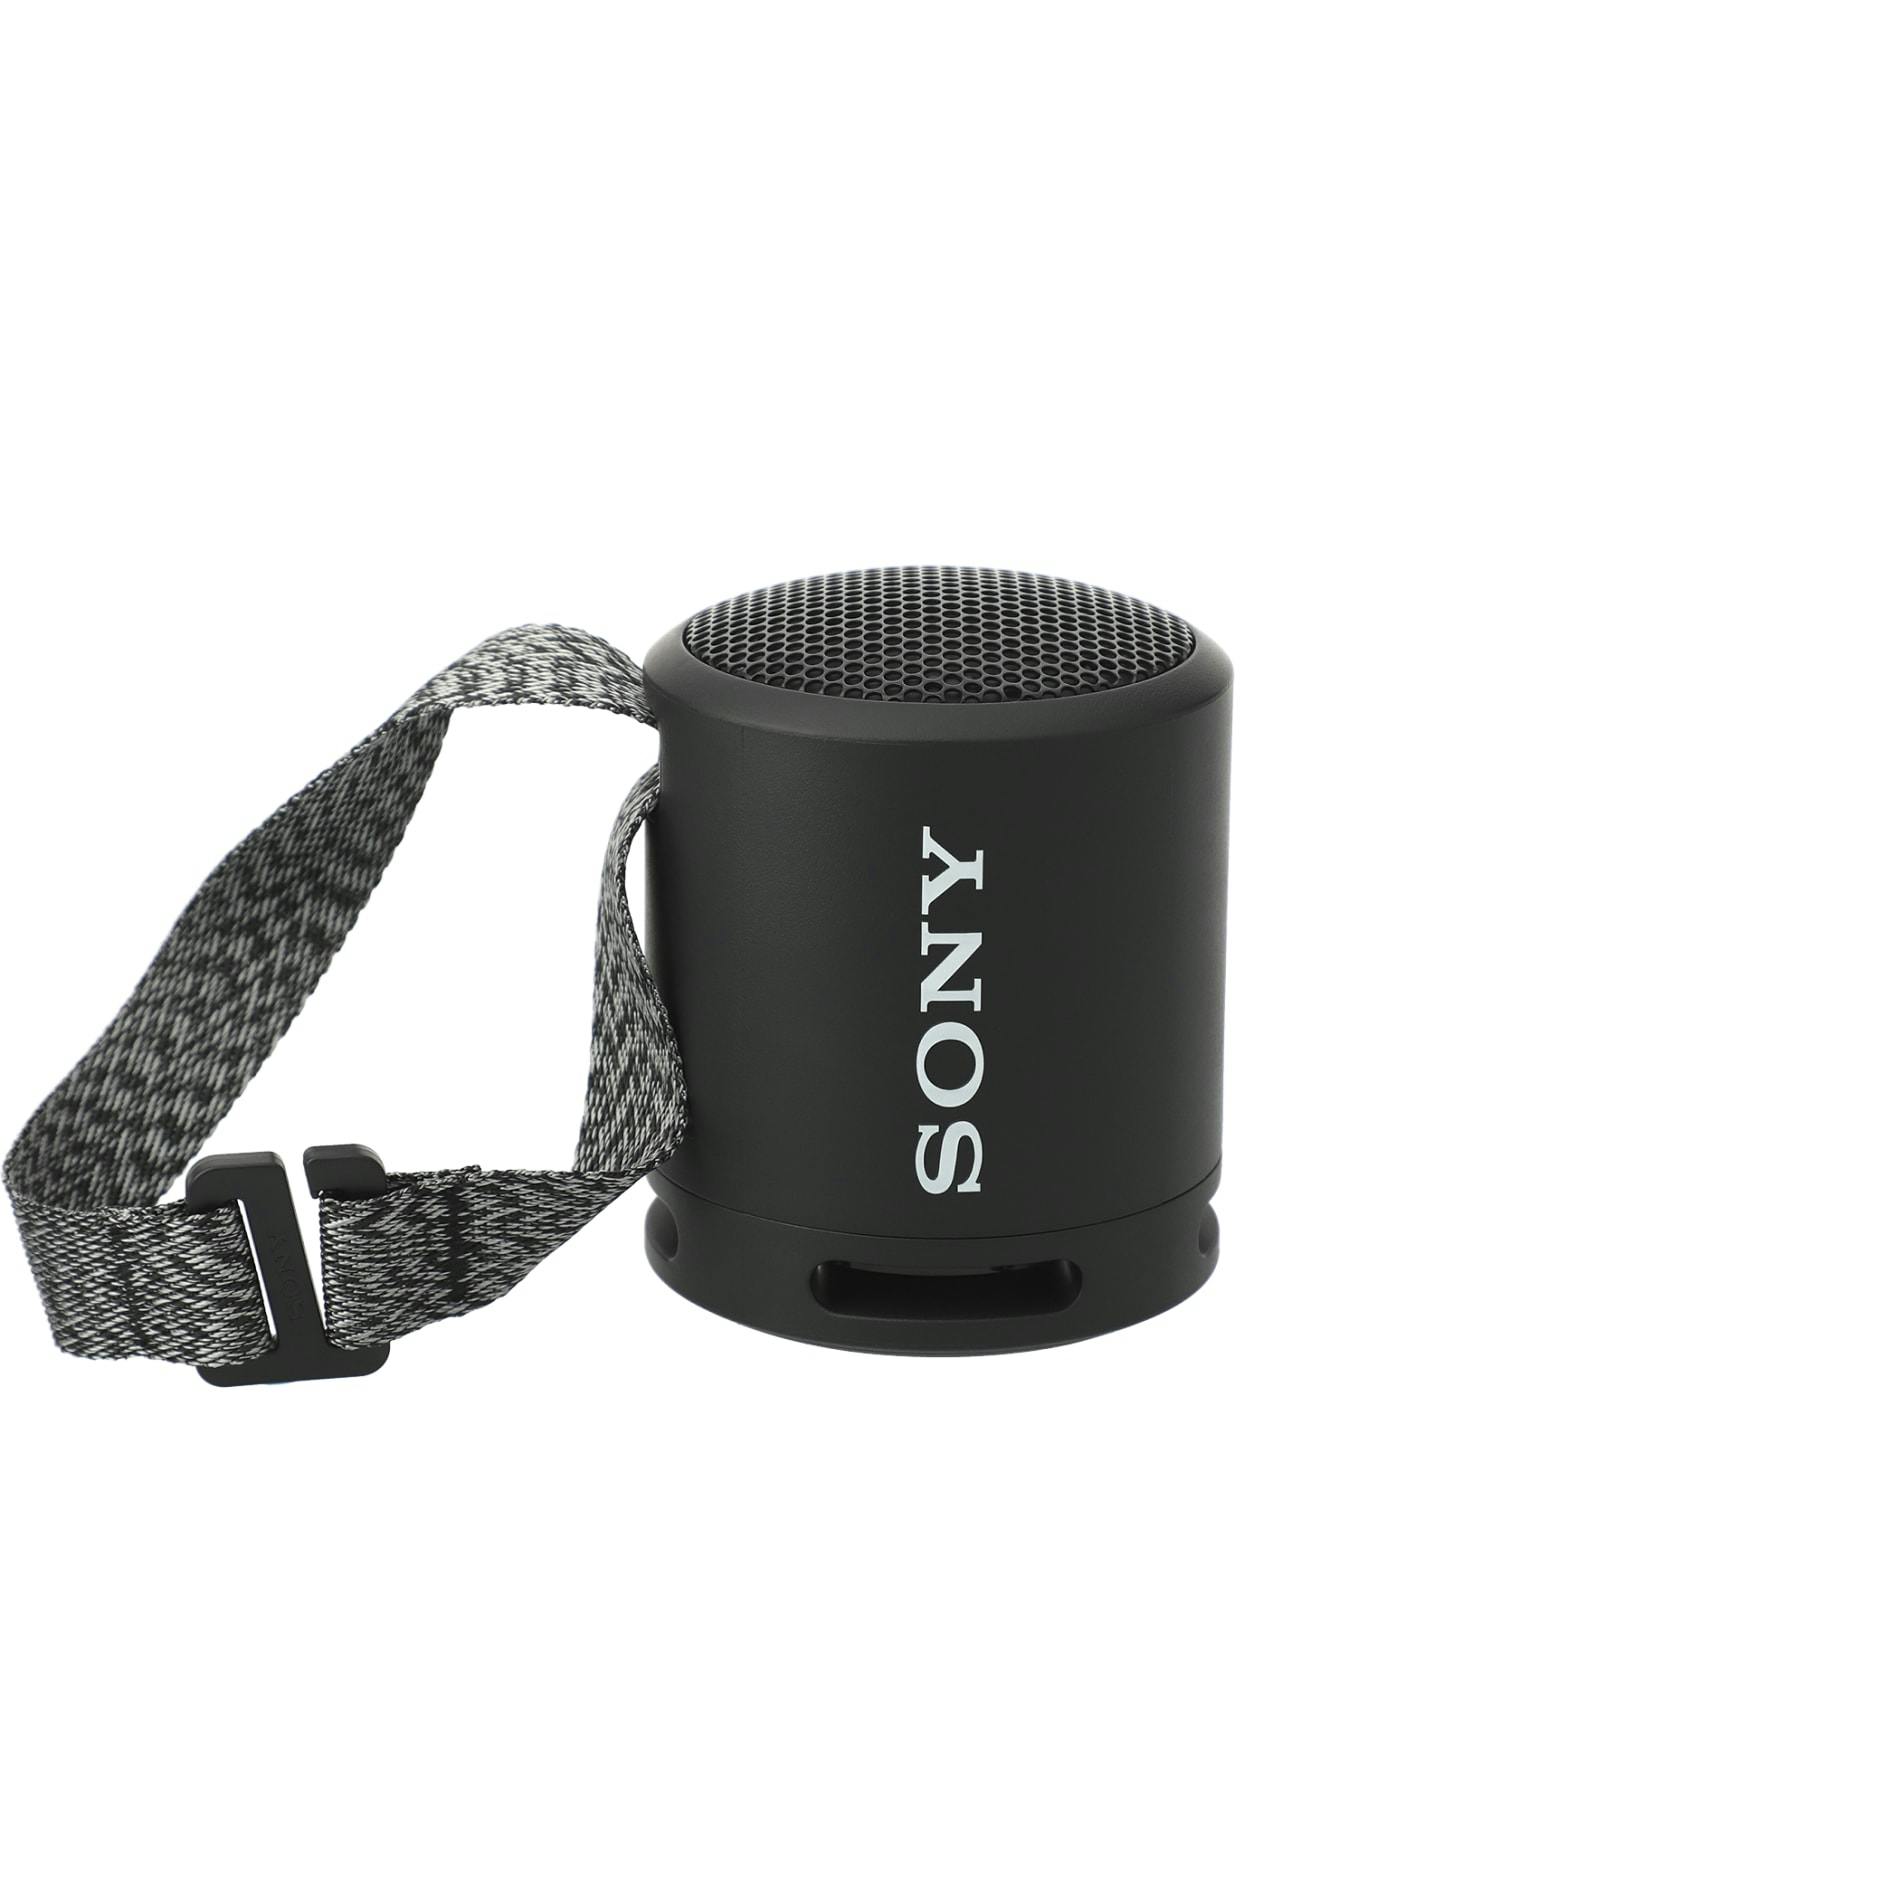 Sony SRS-XB13 Bluetooth Speaker - additional Image 4